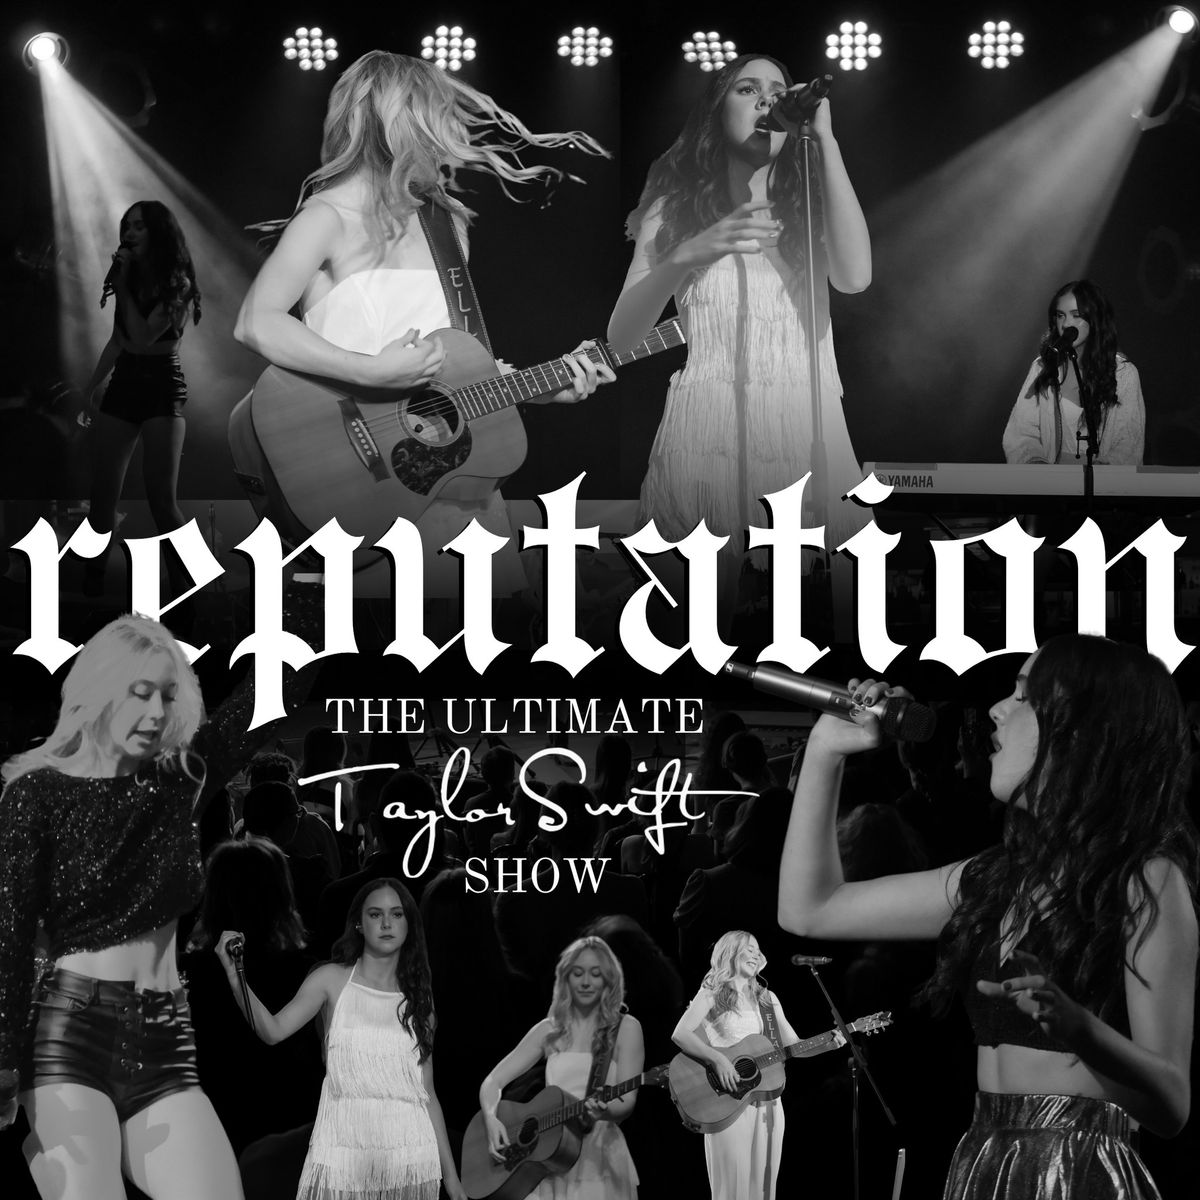 REPUTATION: The Ultimate Taylor Swift Show | BRISBANE, QLD